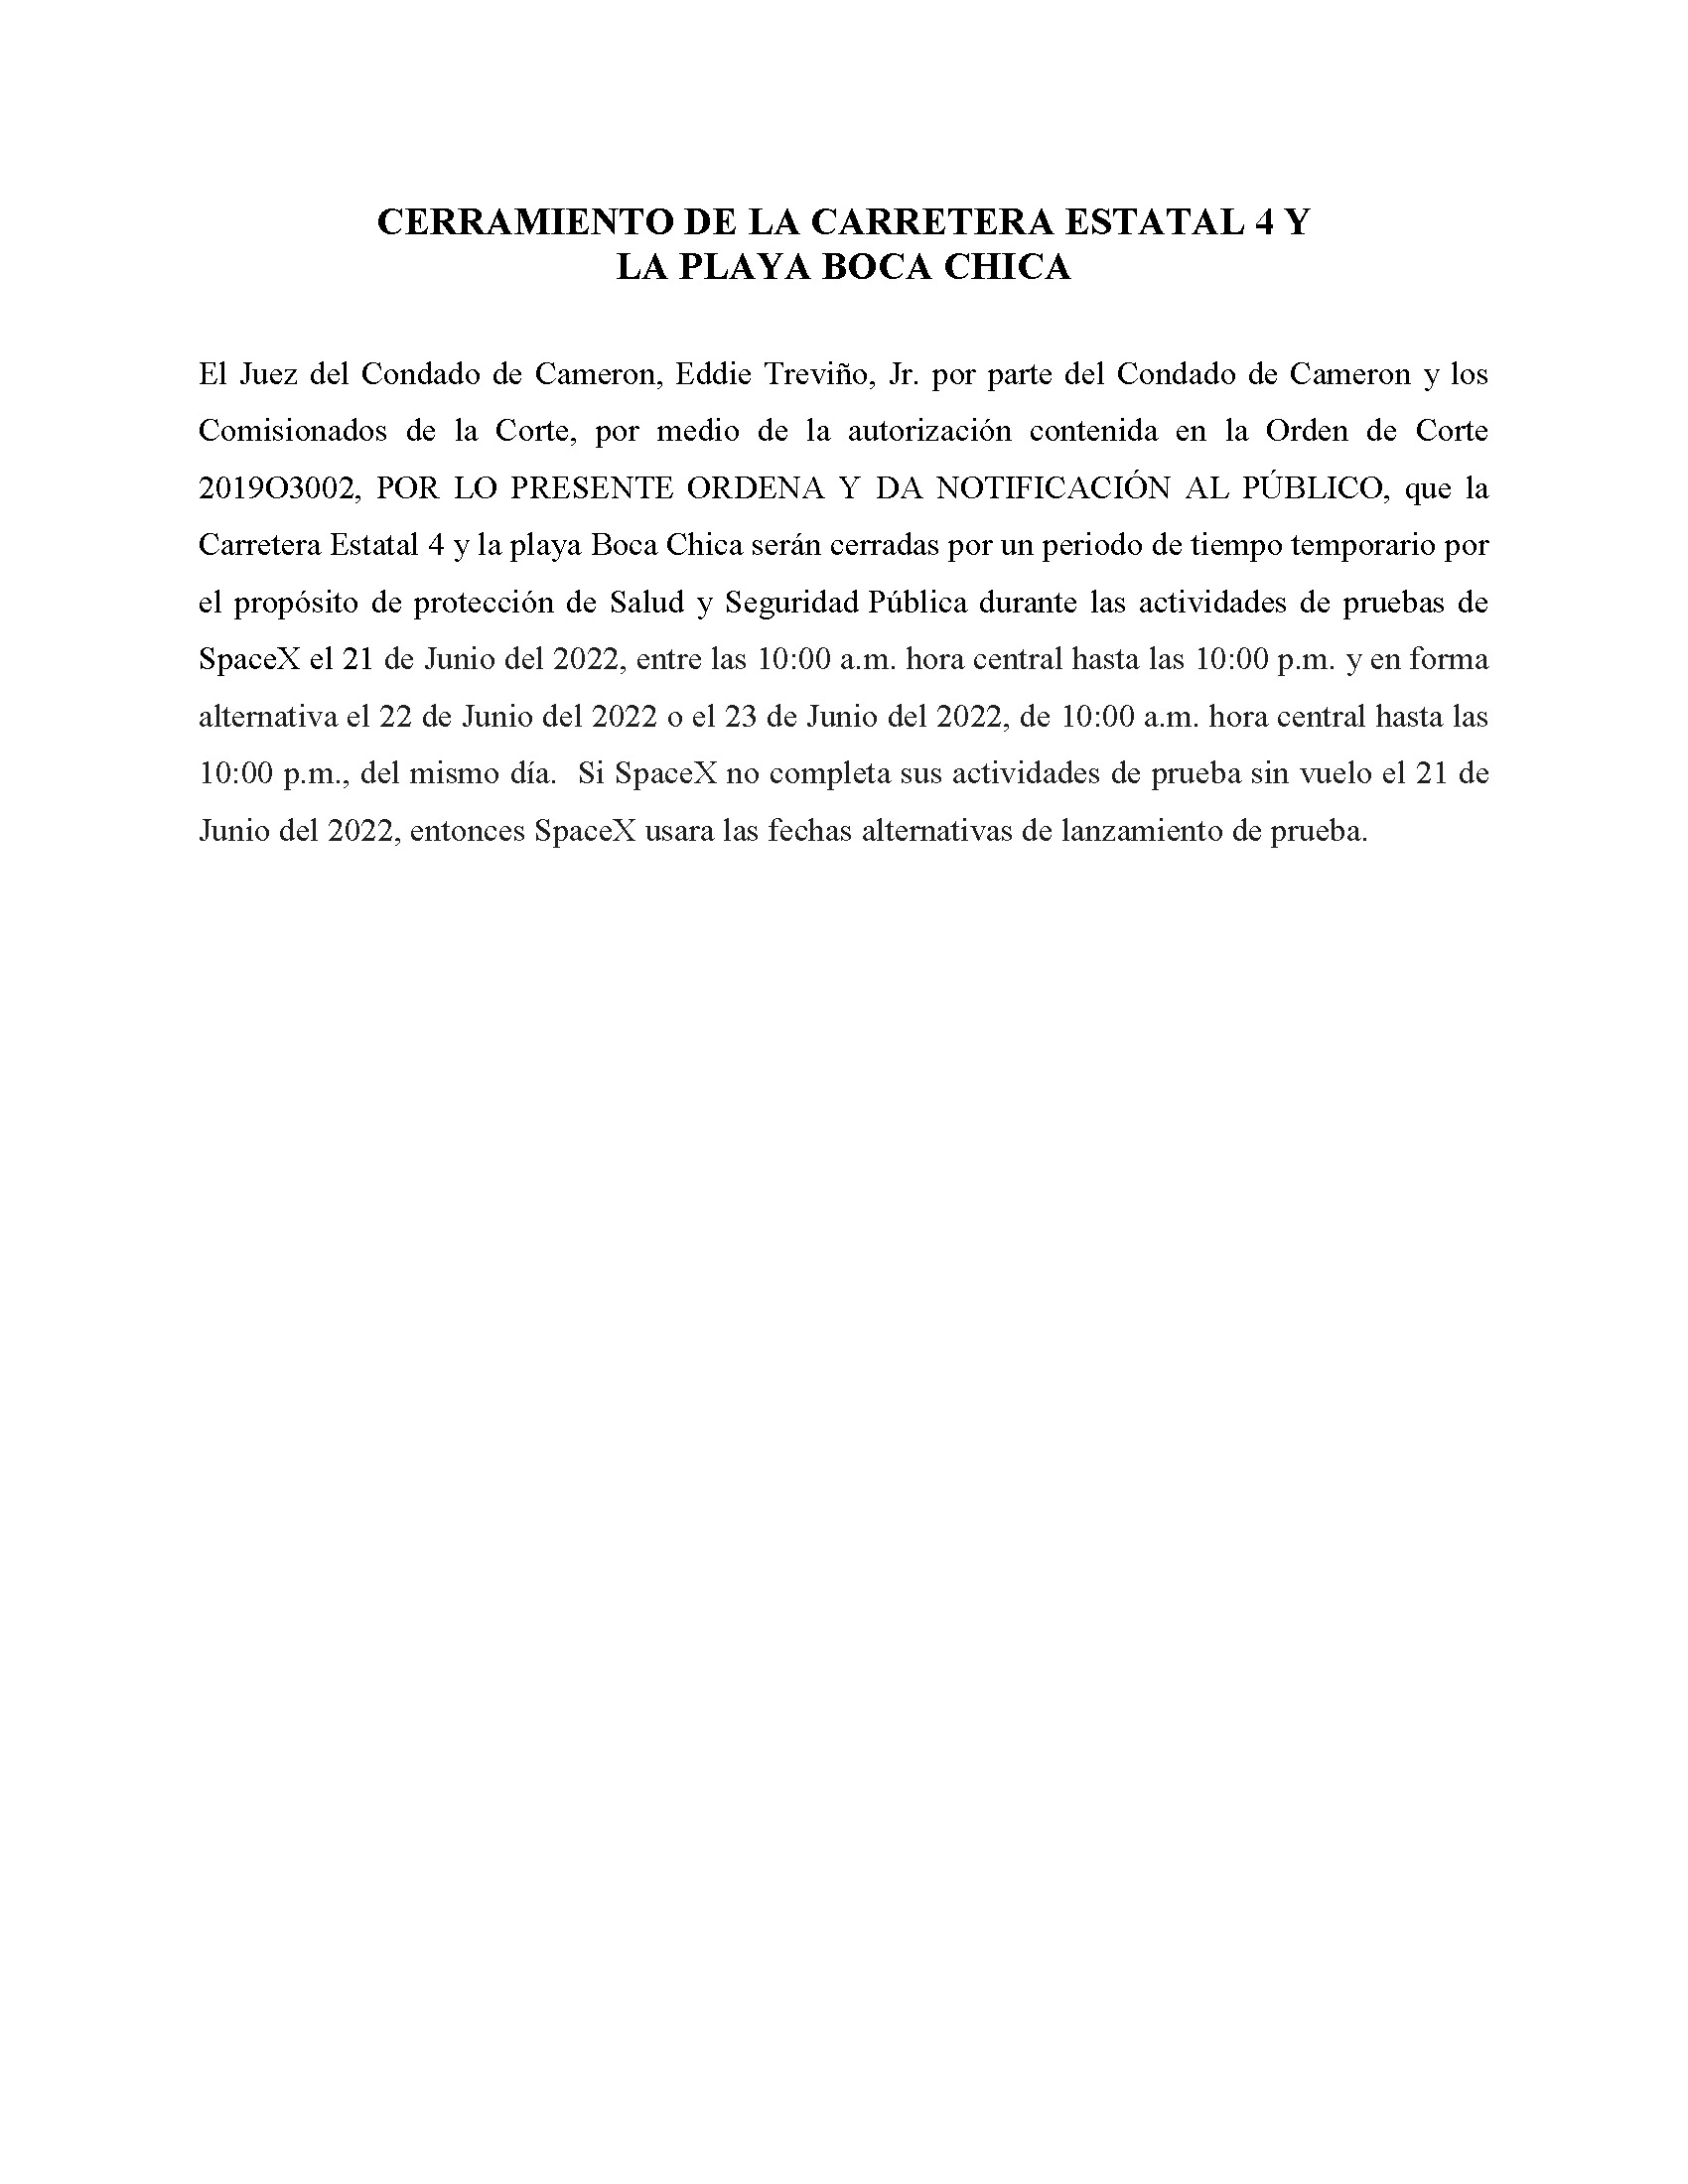 ORDER.CLOSURE OF HIGHWAY 4 Y LA PLAYA BOCA CHICA.SPANISH.06.21.2022